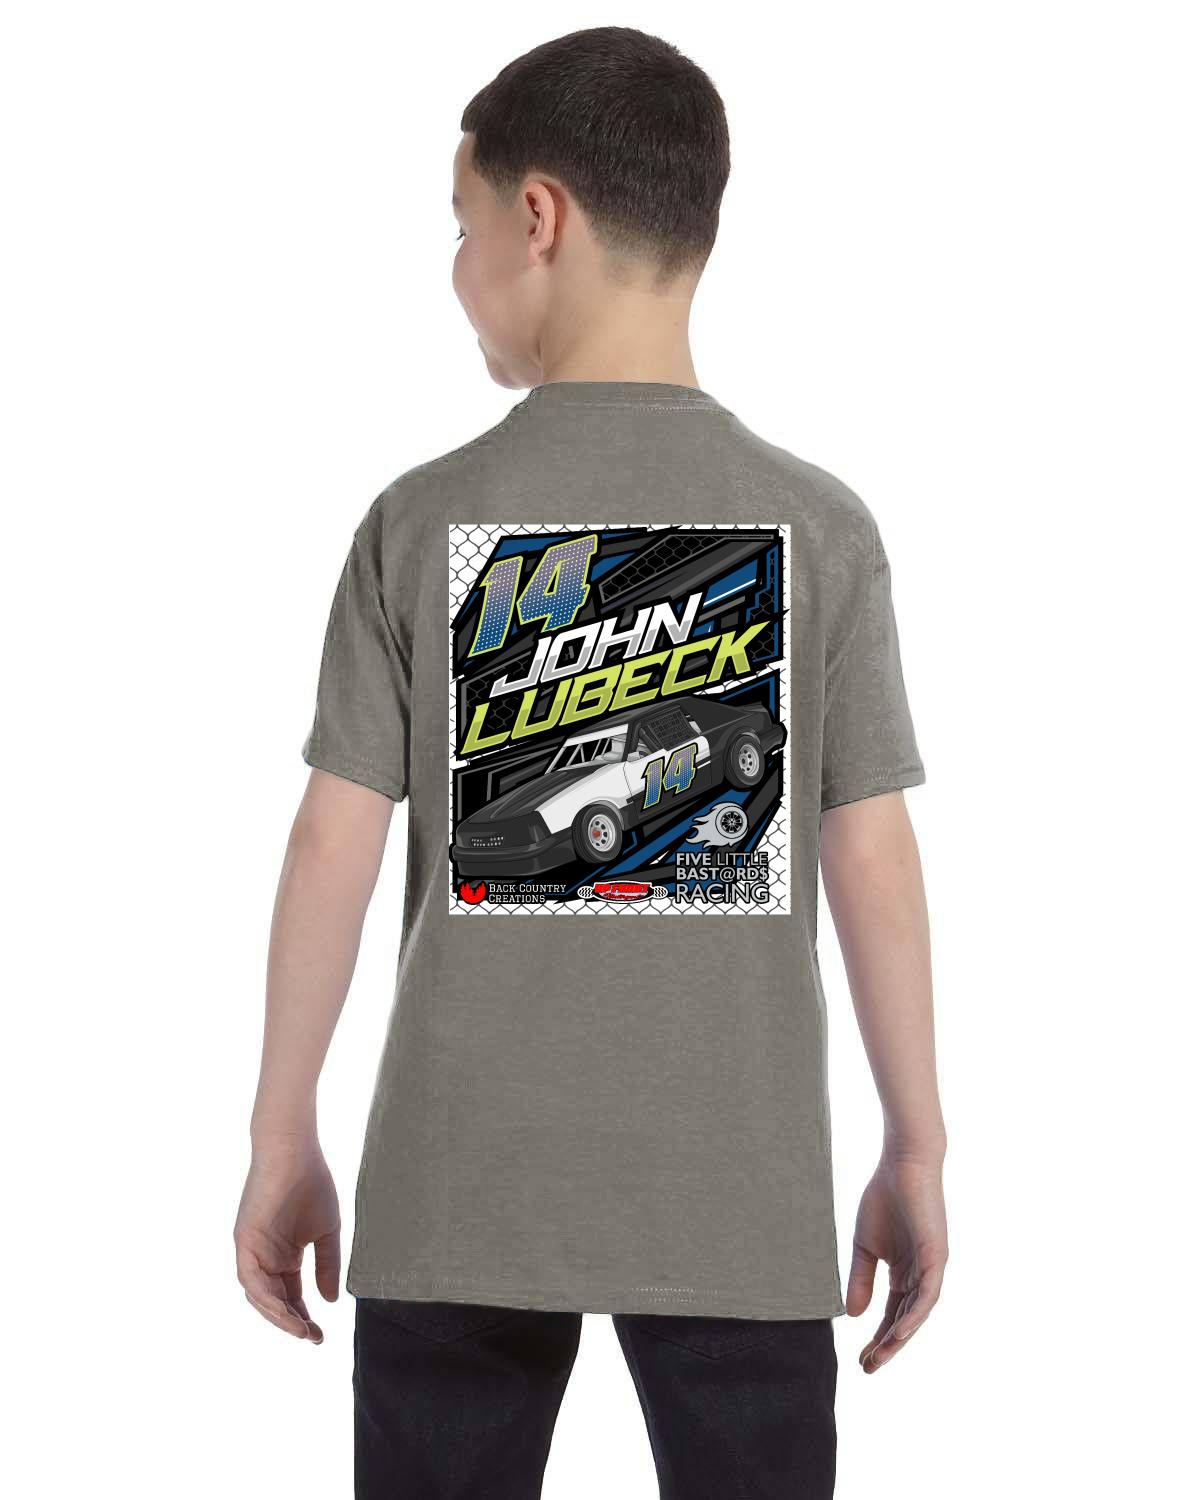 John Lubeck / Upfront Motorsports Youth T-Shirt